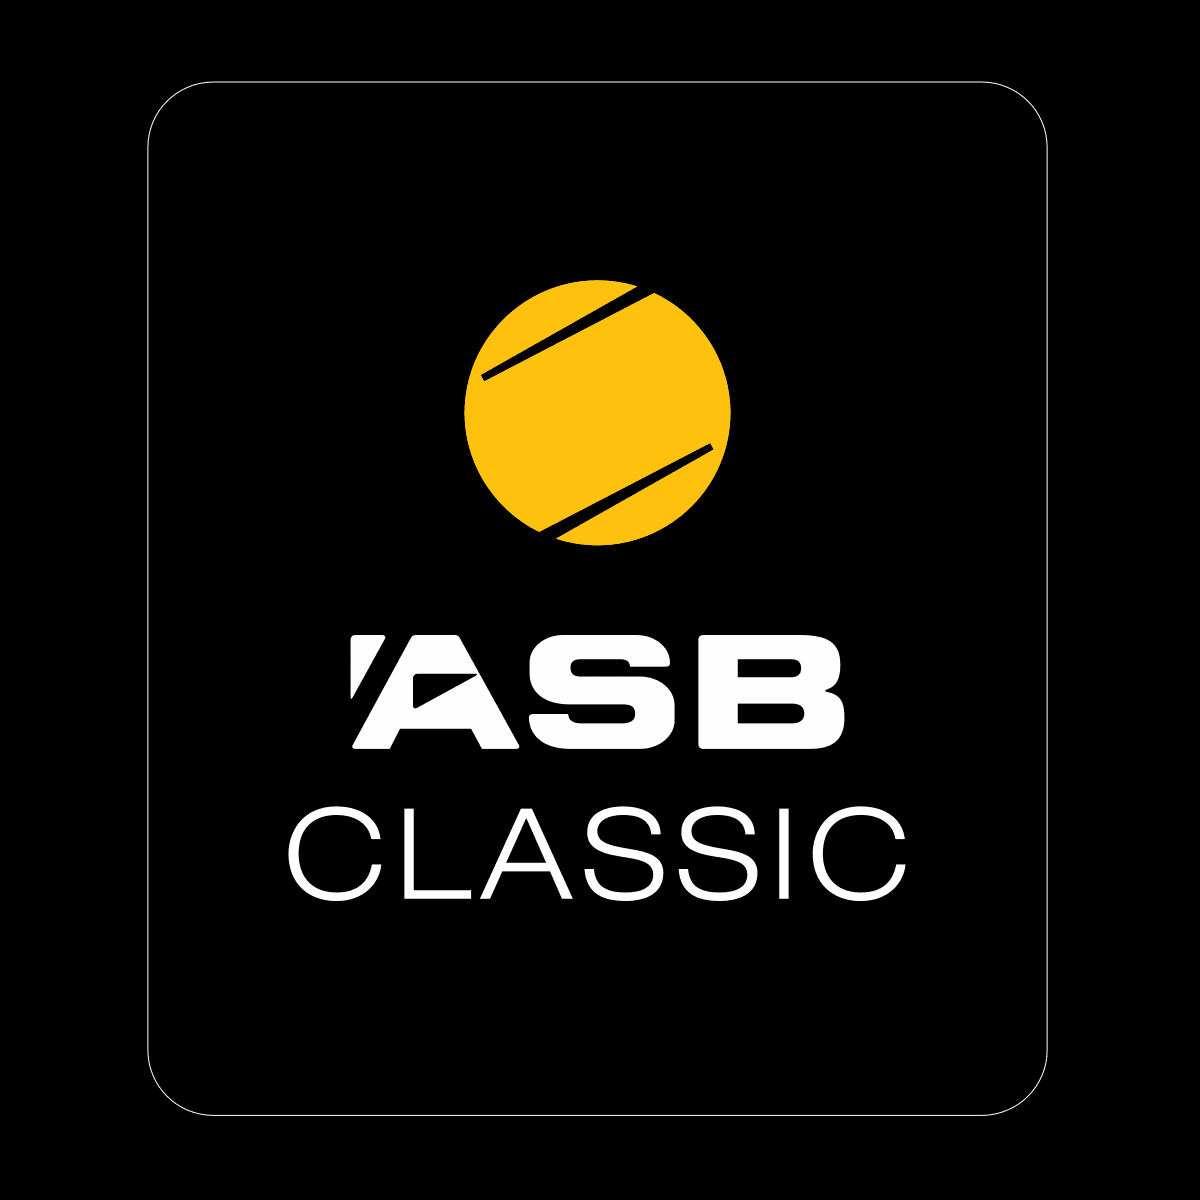 ASB Classic is NZ's premier tennis tournament.